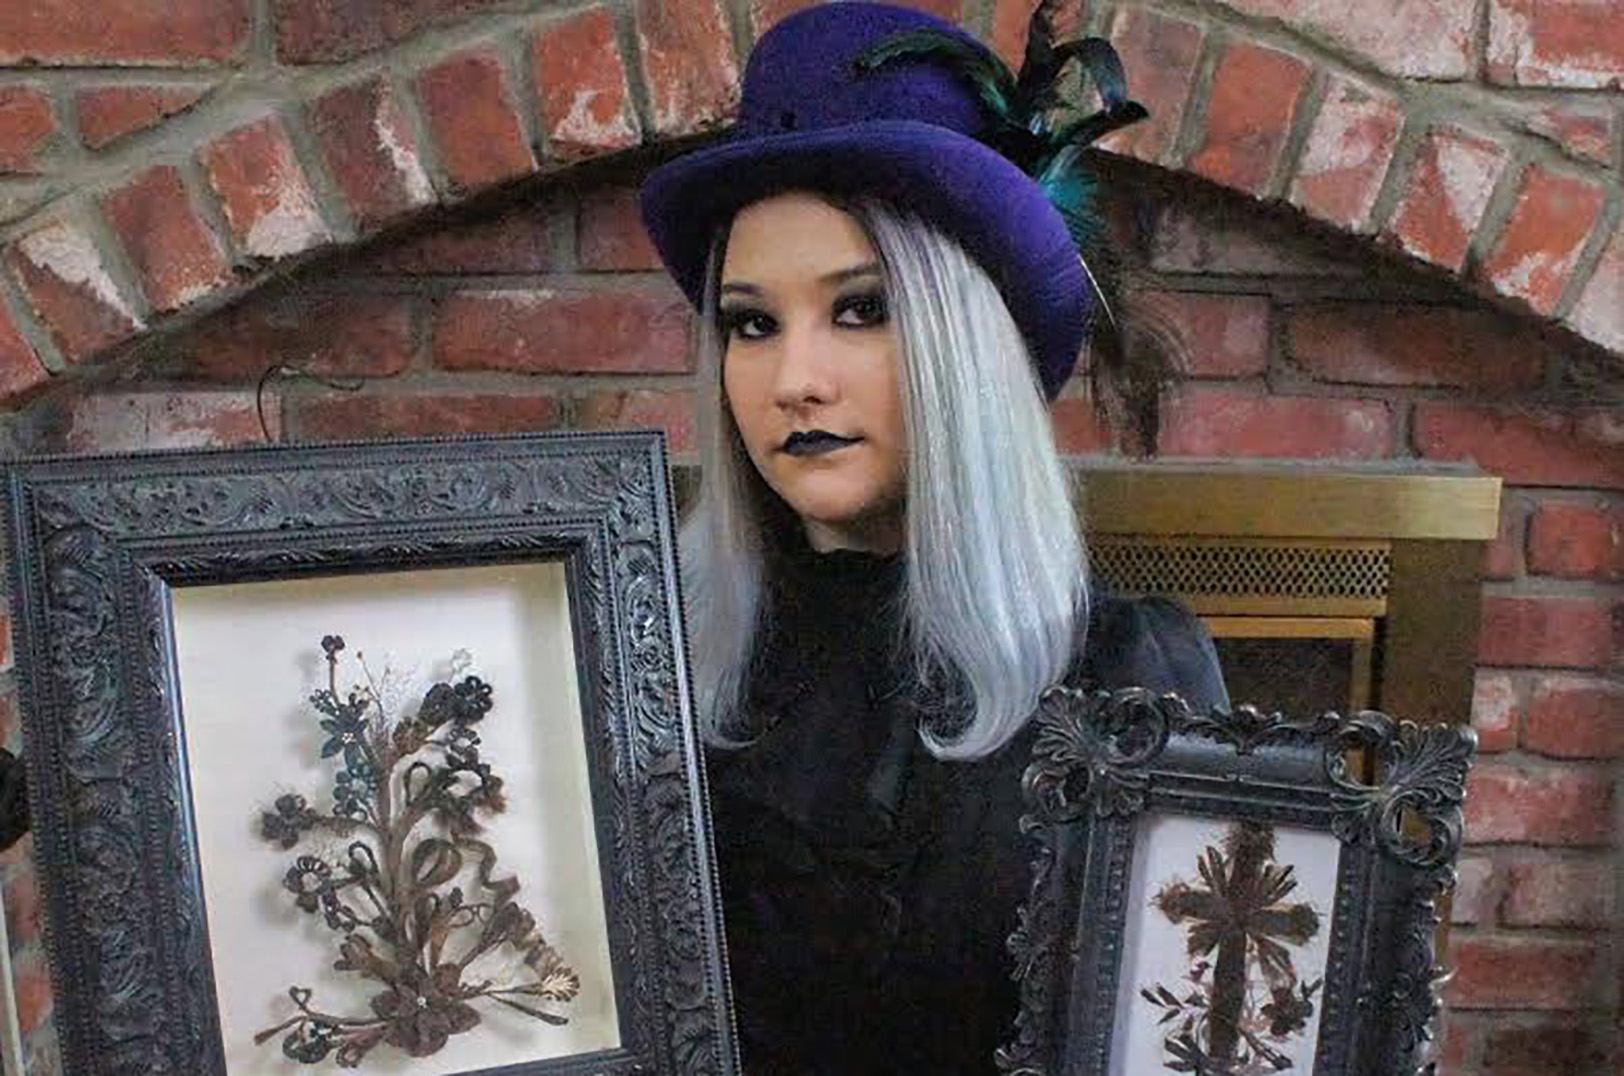 Victorian hair artist resurrects dead art form; talks representation for asexual, disabled communities